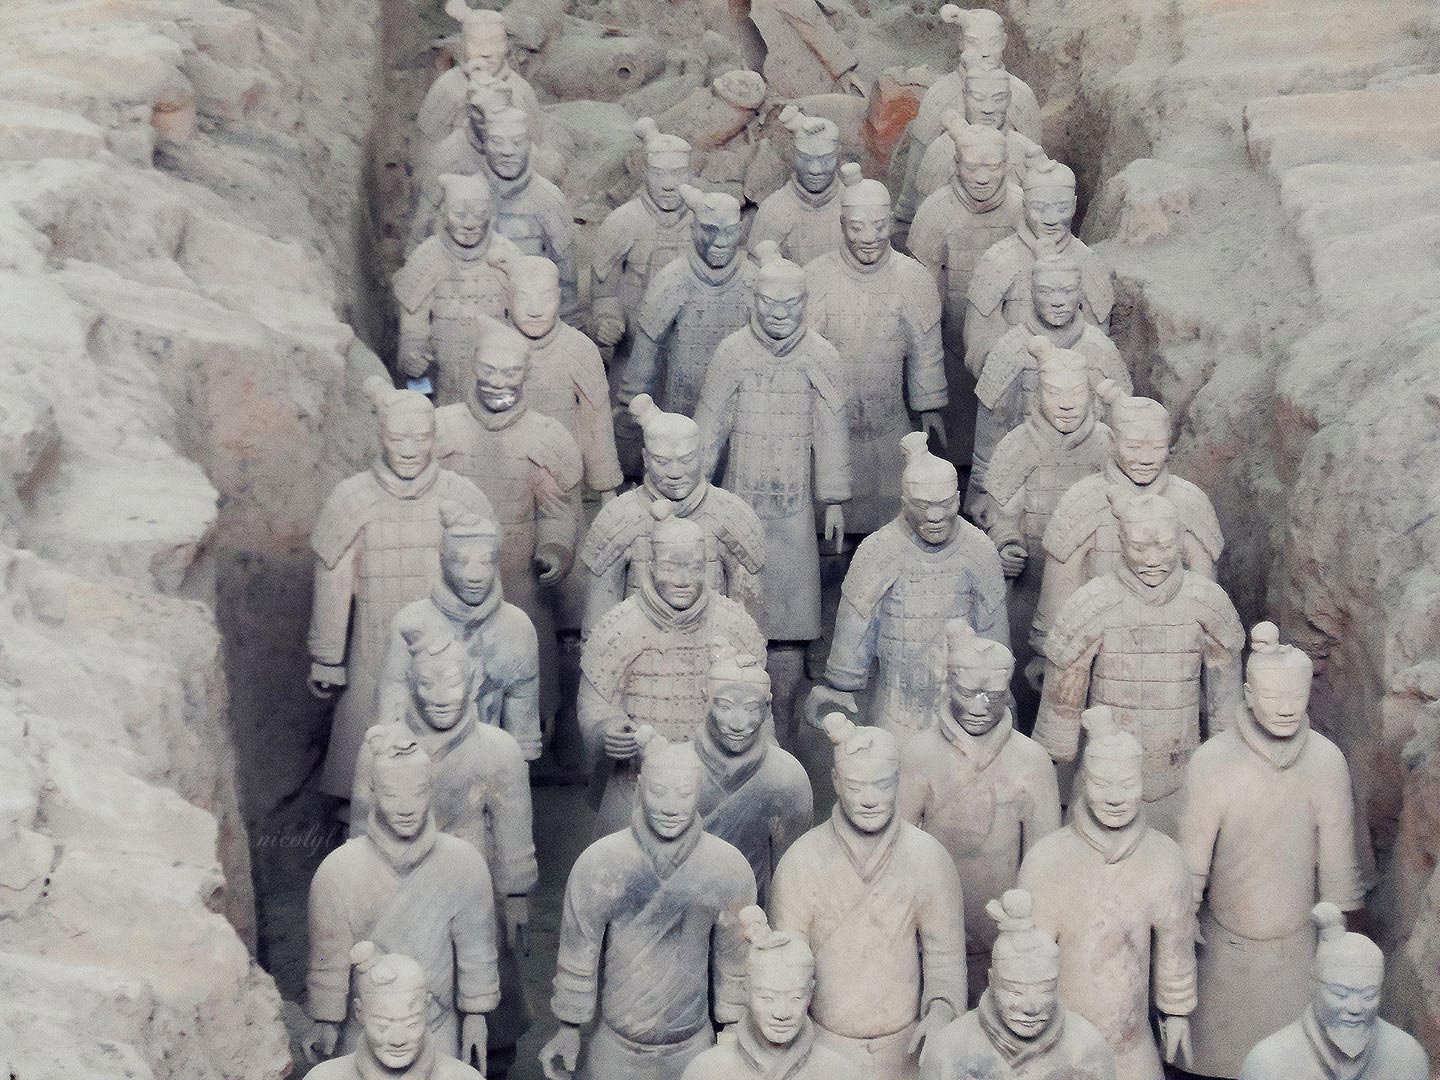 terracotta army warriors Xian